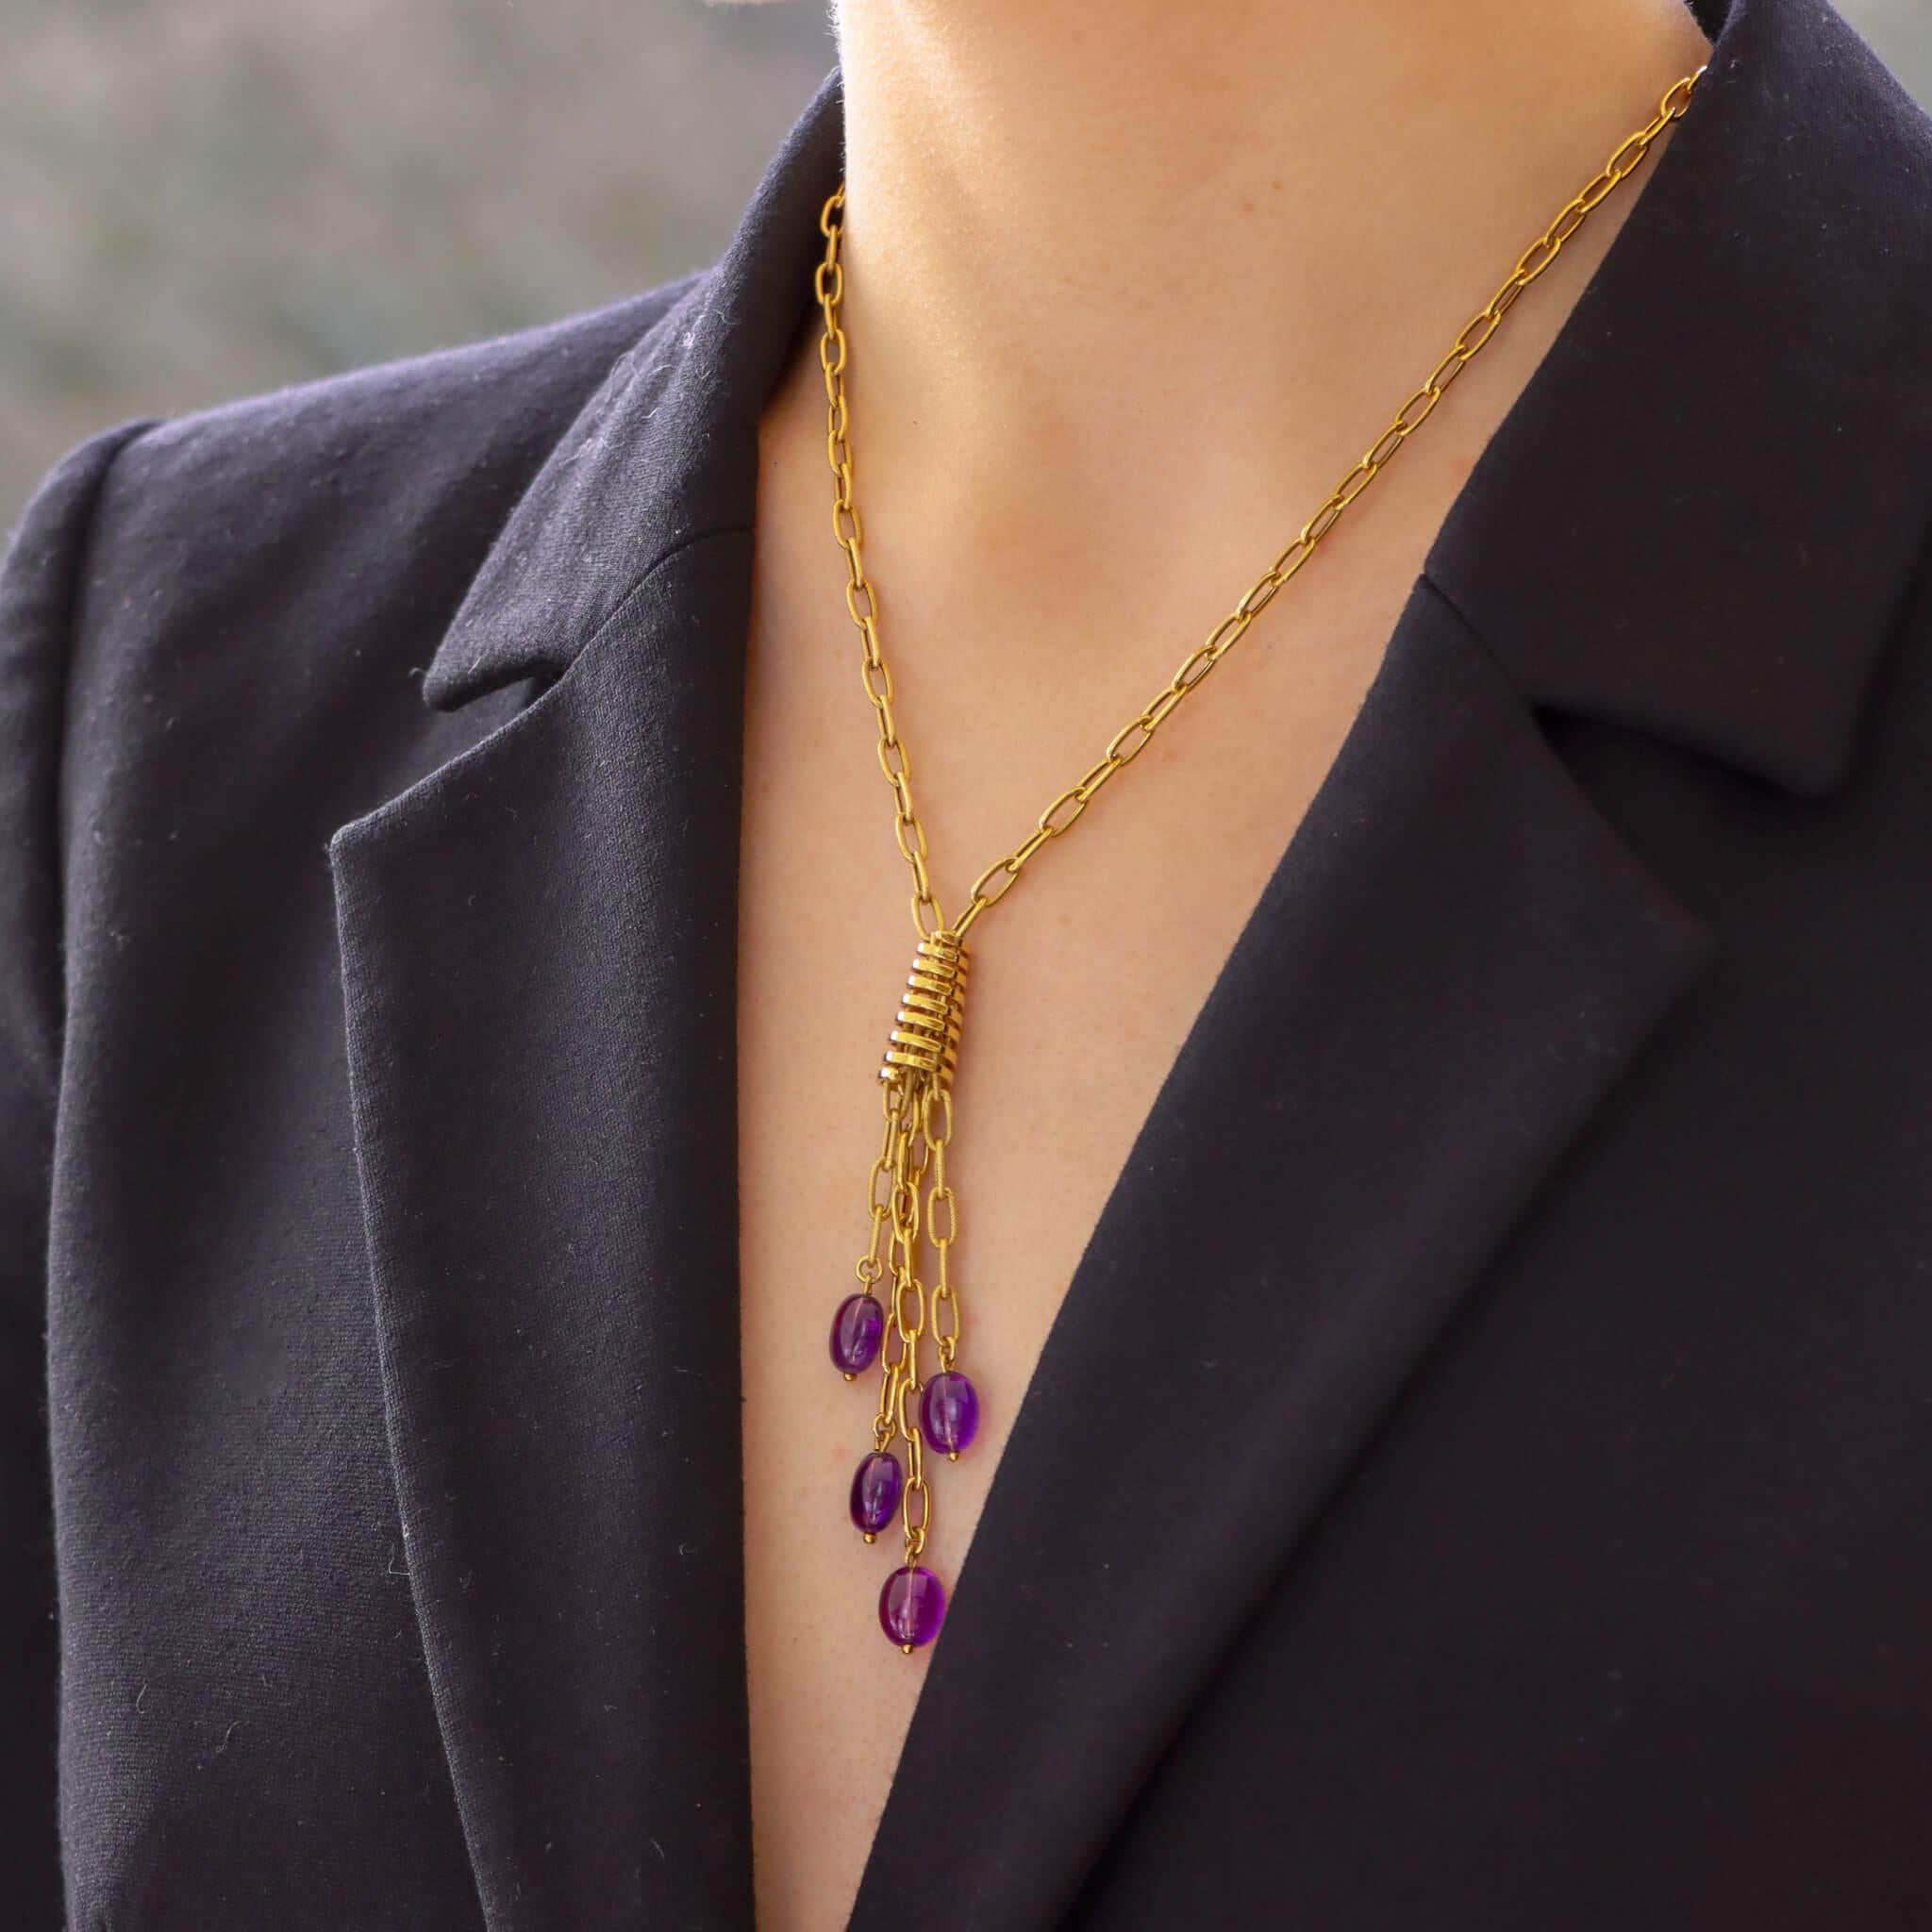 Retro Vintage Italian Amethyst Chain Link Tassel Necklace Set in 18k Yellow Gold